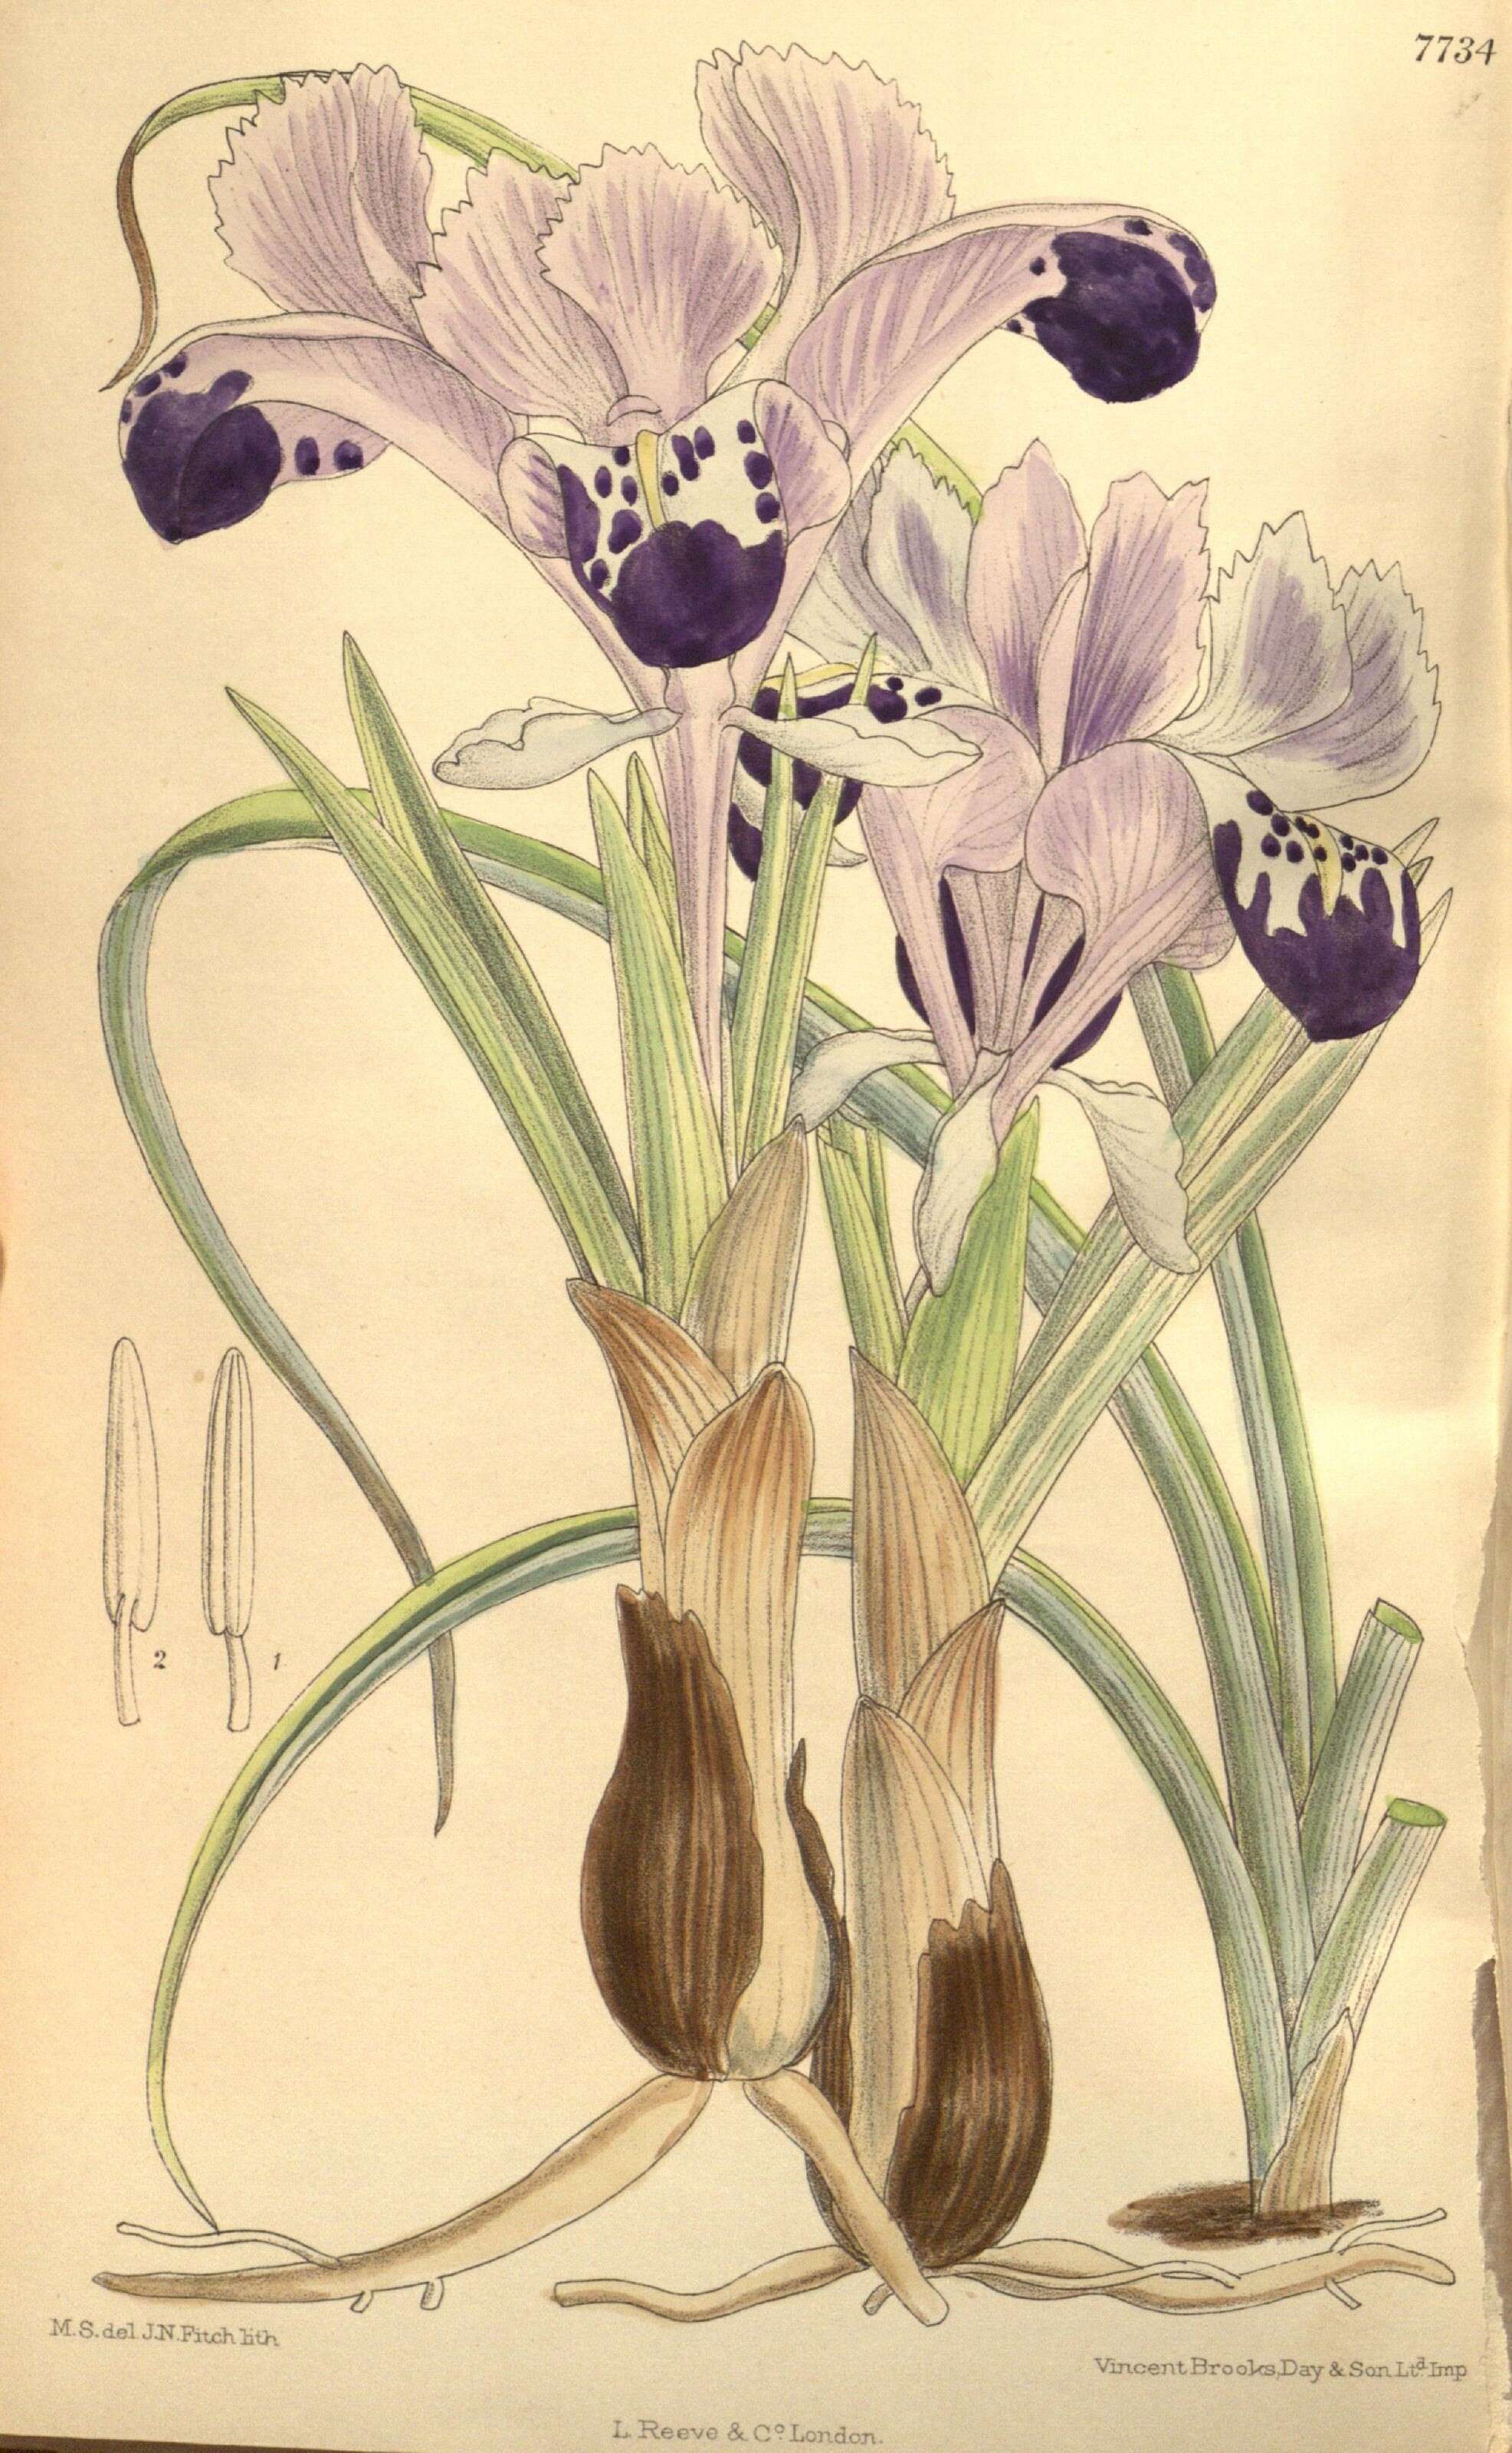 Image of Iris stenophylla Hausskn. ex Baker